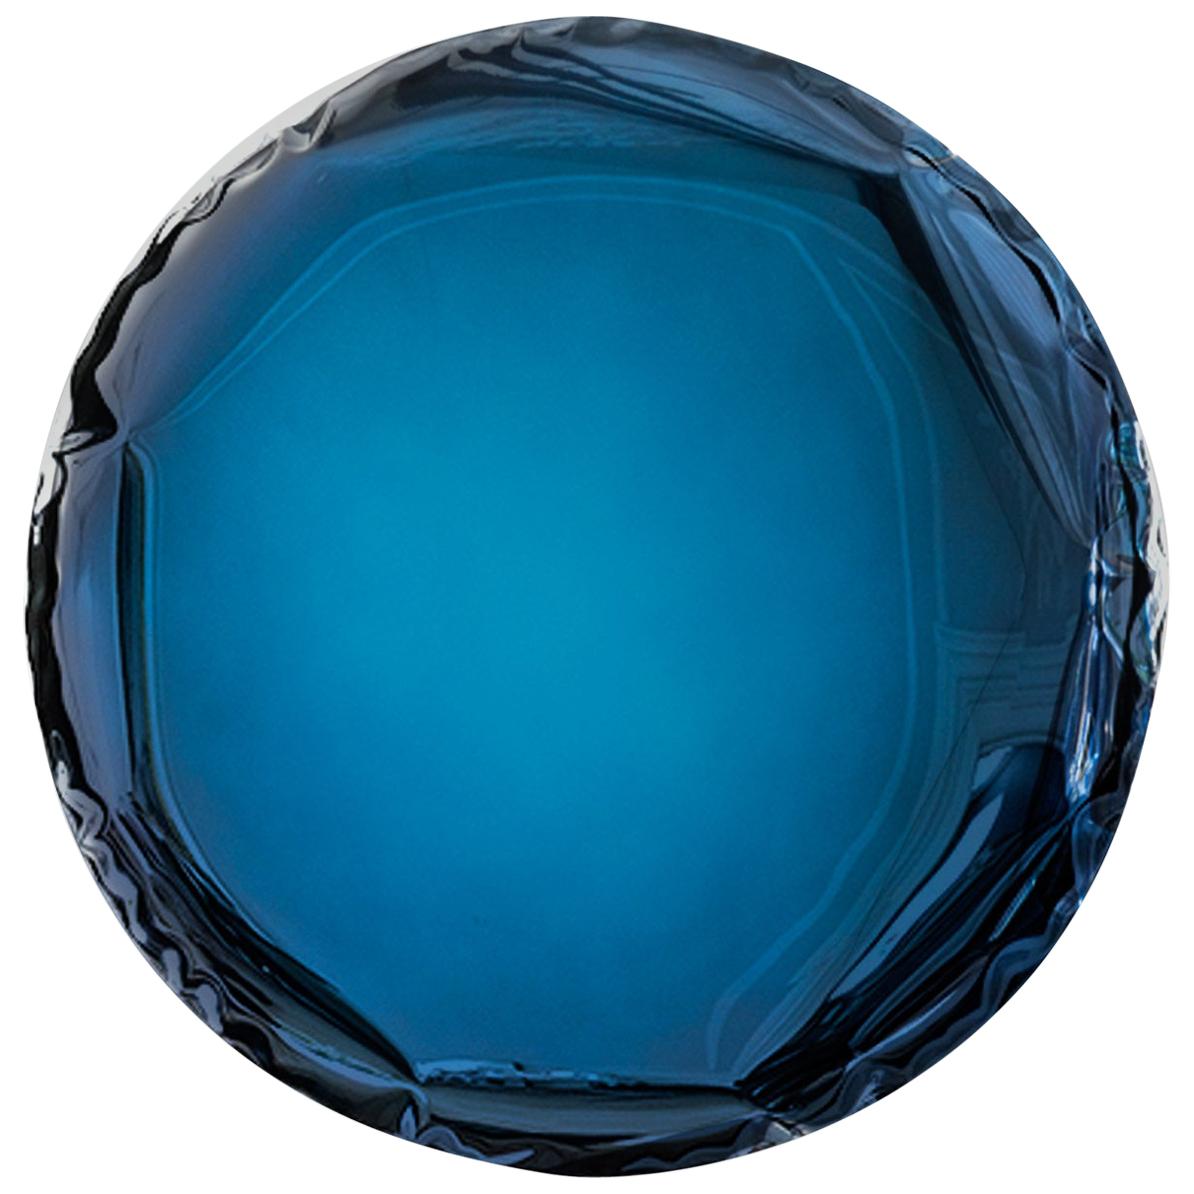 MiroirOKO 150 bleu profond, en acier inoxydable par Zieta